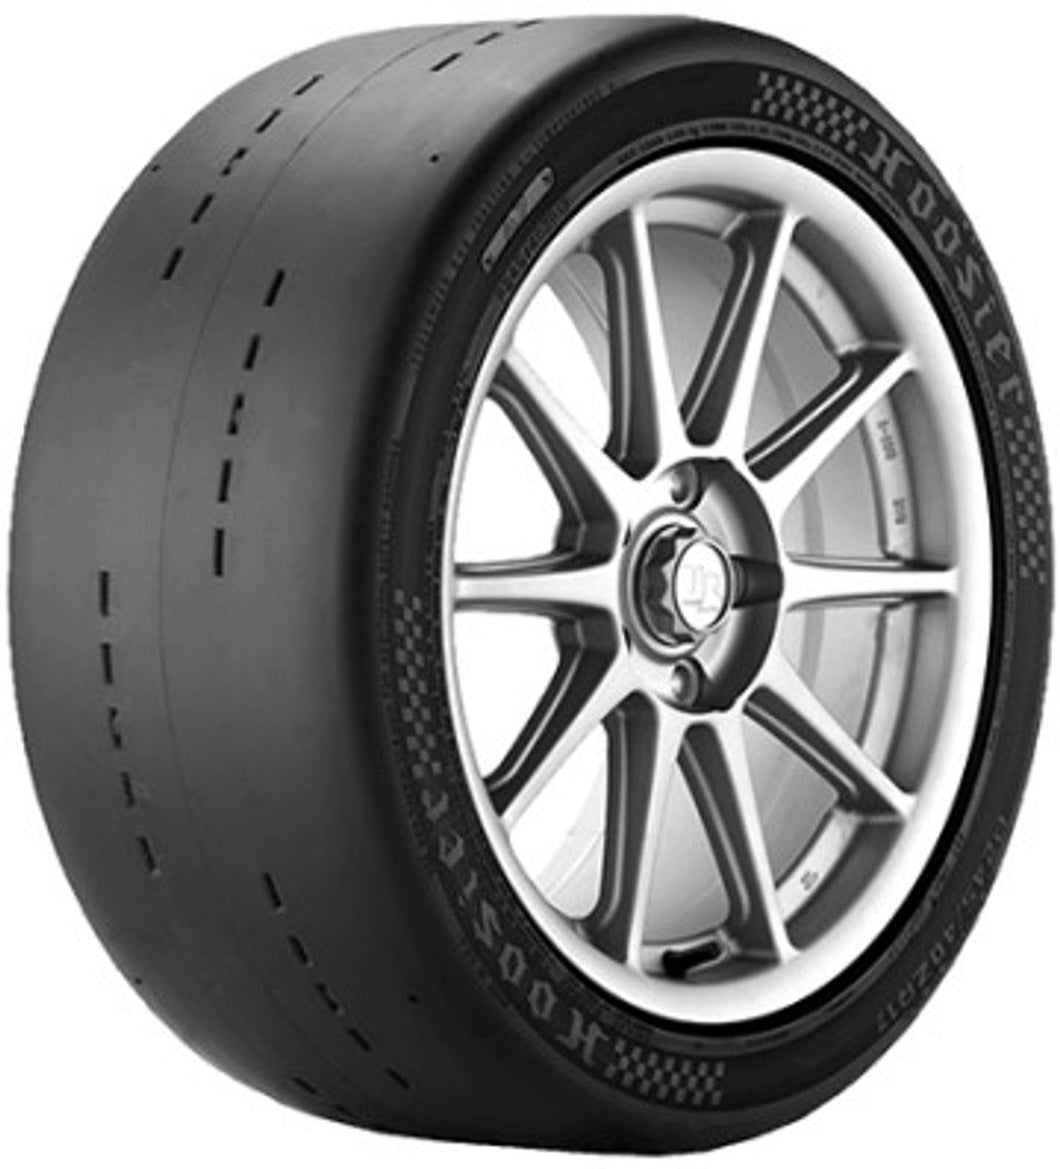 265/35 ZR19 Hoosier Tire Slick D.O.T Neumático